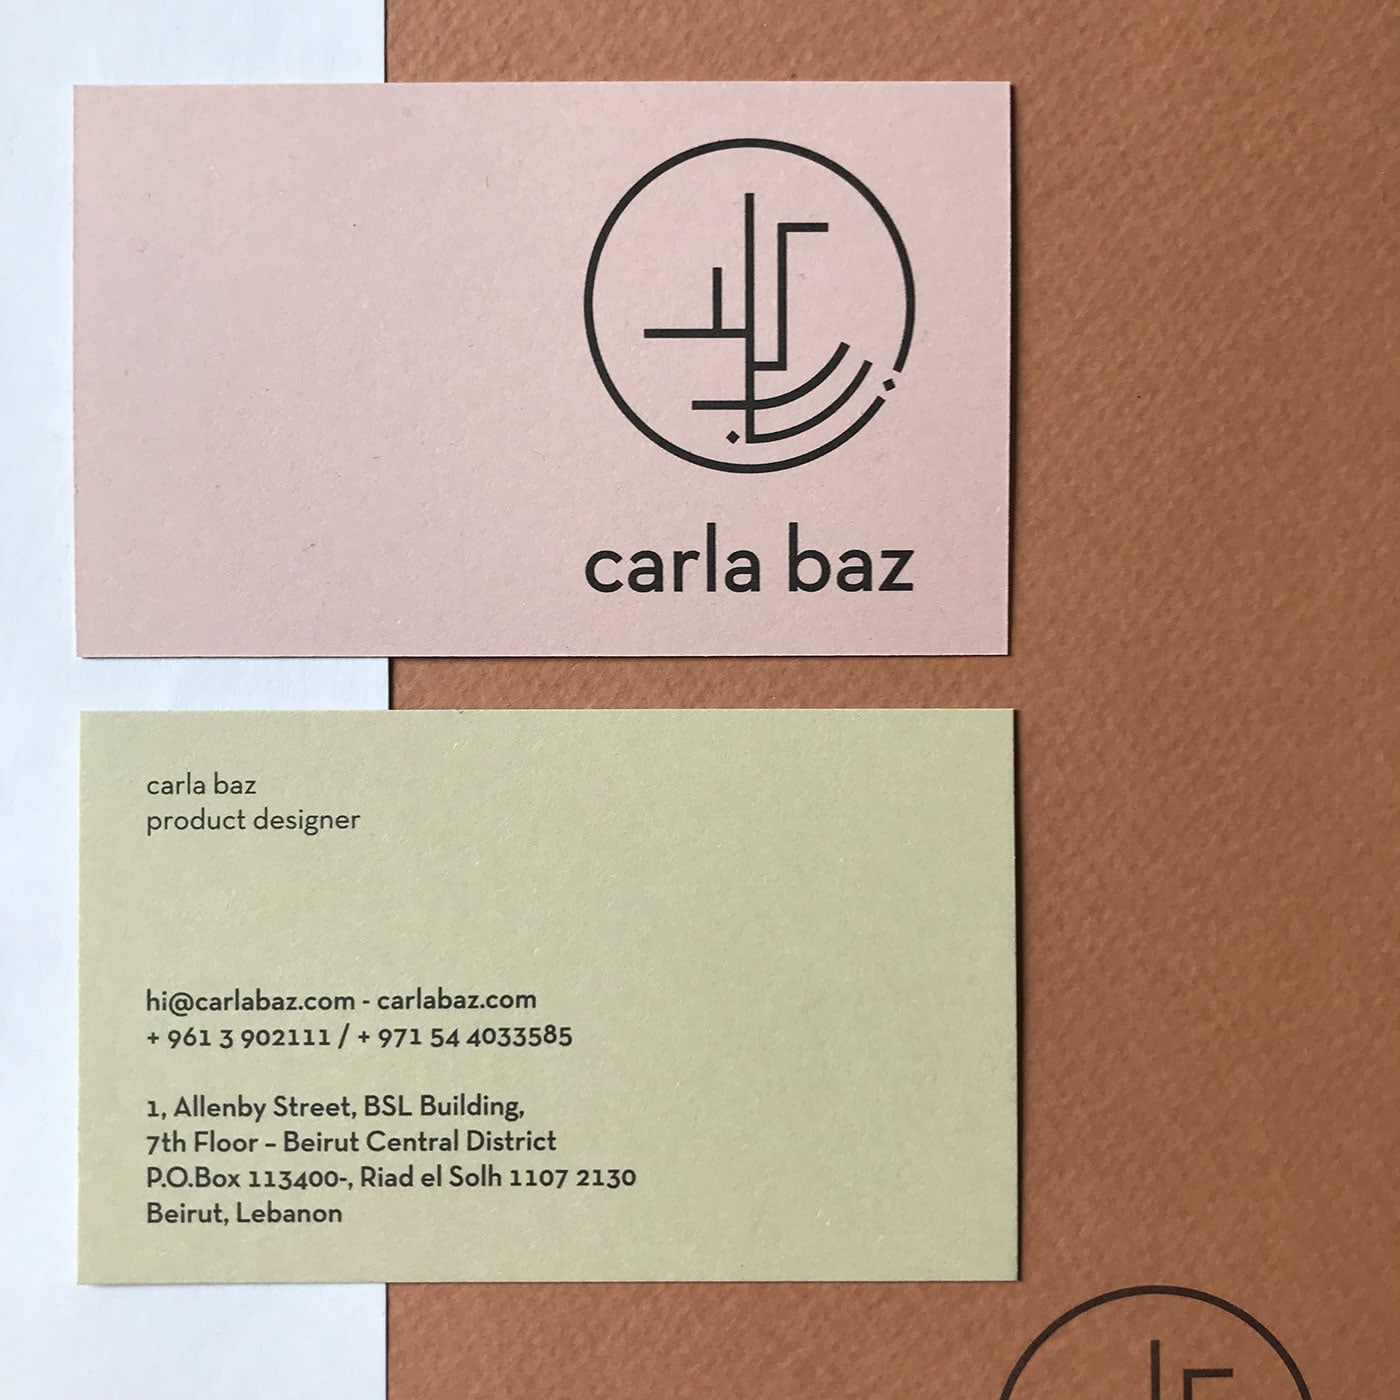 New Brand Identity for Rafaela Abrahão by BR/Bauen - BP&O